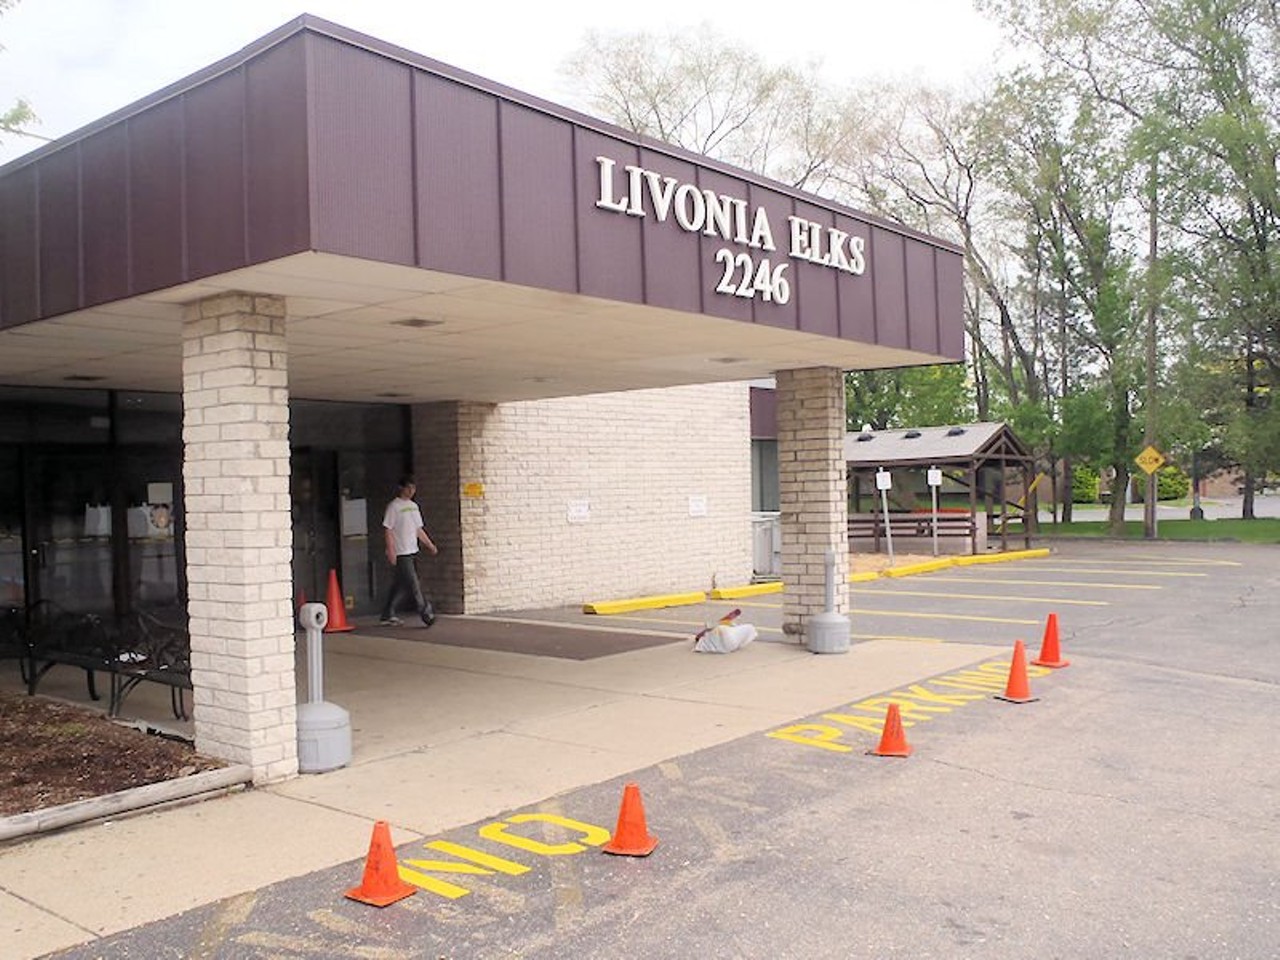 Livonia Elks 2246 - Hosts Bingo Wednesdays from 6:30 p.m. &#150; 10 p.m. at 31117 Plymouth Livonia, MI 48150. Photo.